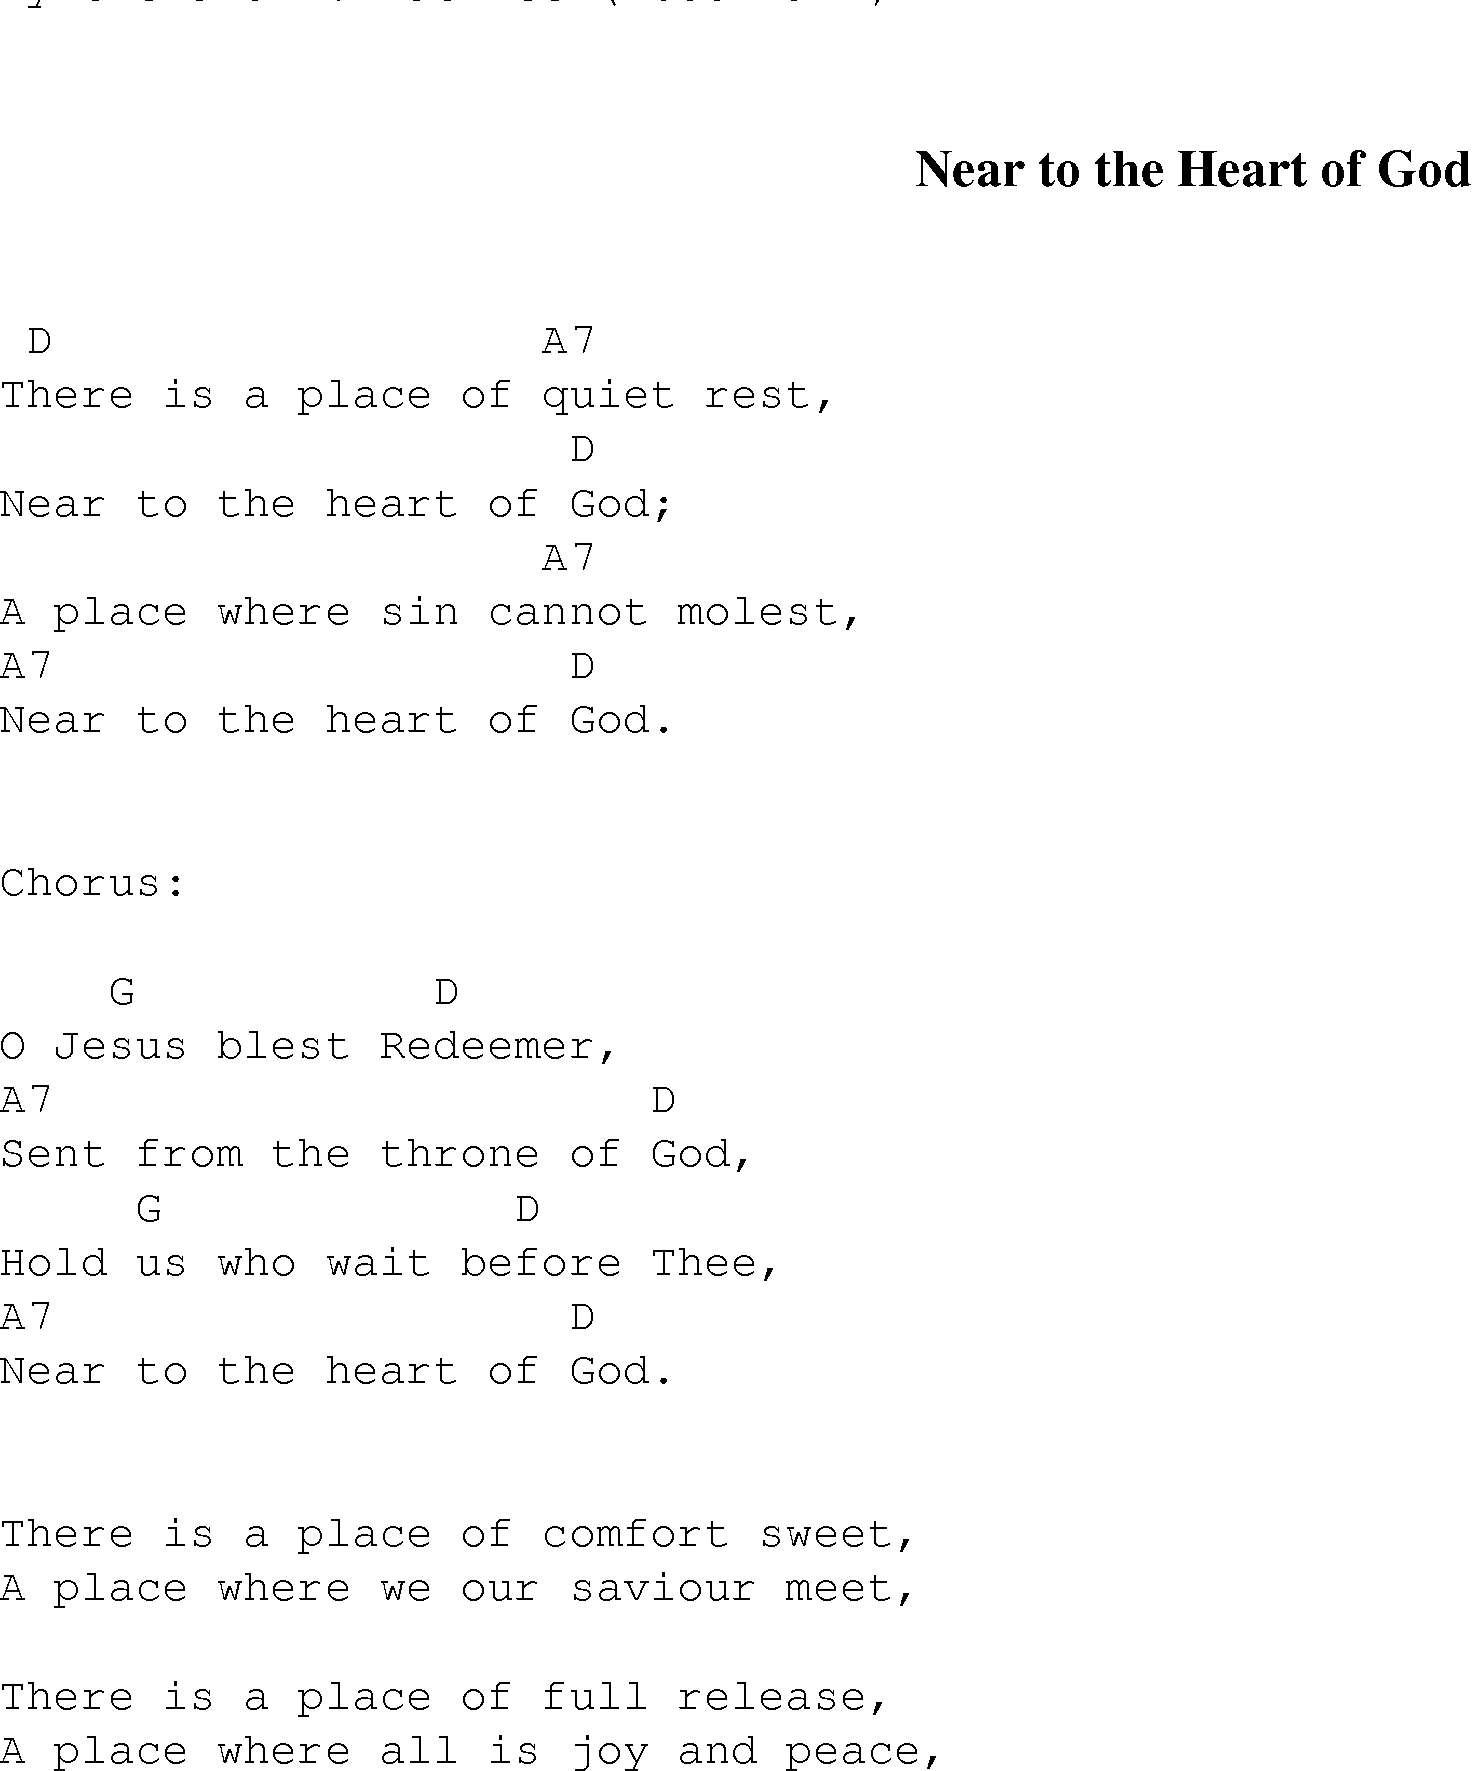 Gospel Song: near_to_the_heart, lyrics and chords.